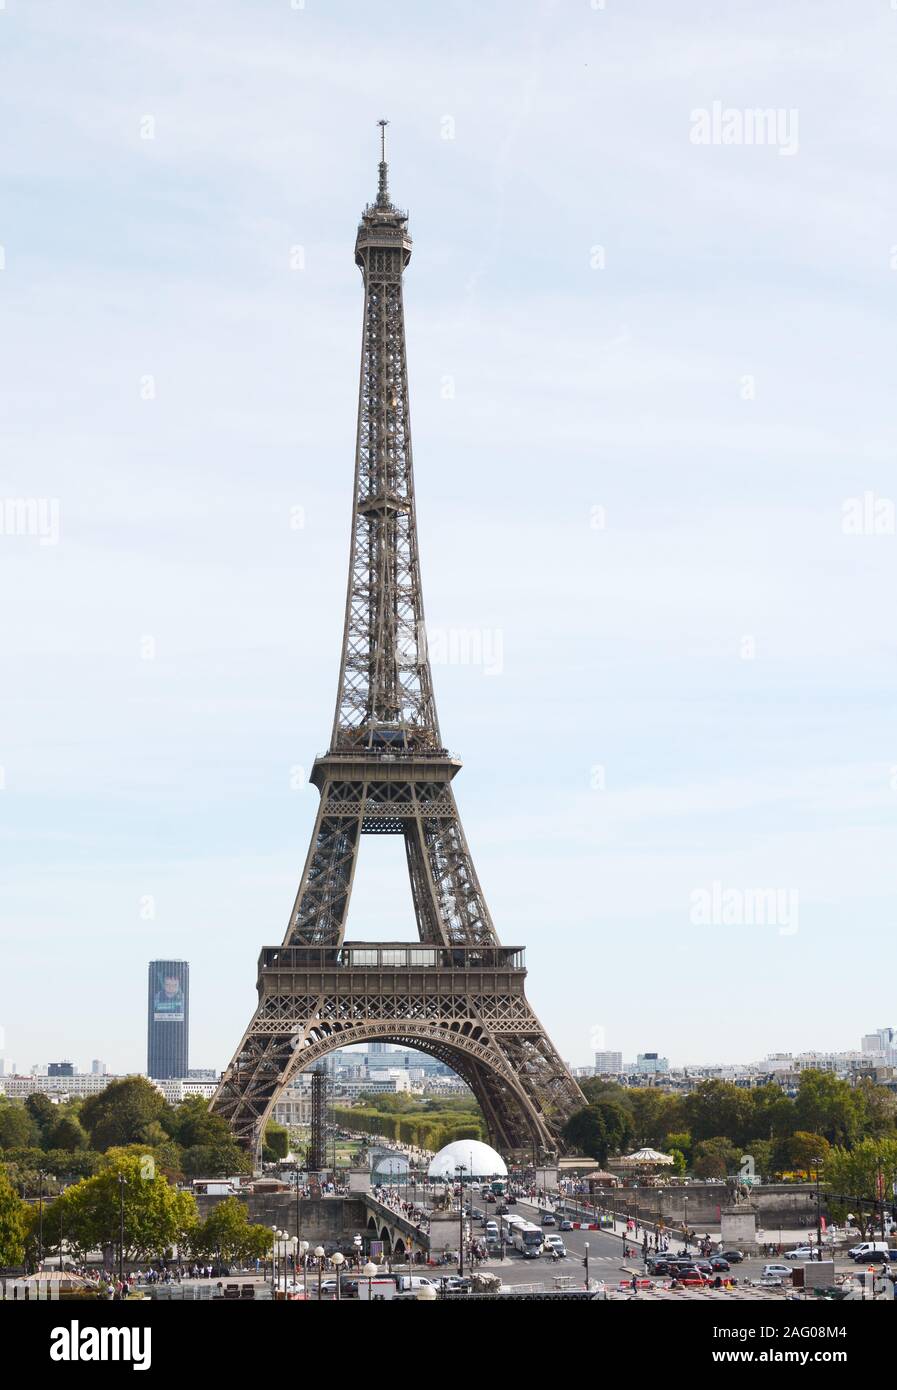 PARIS, FRANCE - SEPTEMBER 16, 2019: Famous Paris landmark, the Eiffel Tower, at Champ de Mars, seen from the Trocadero on September 16, 2019 Stock Photo